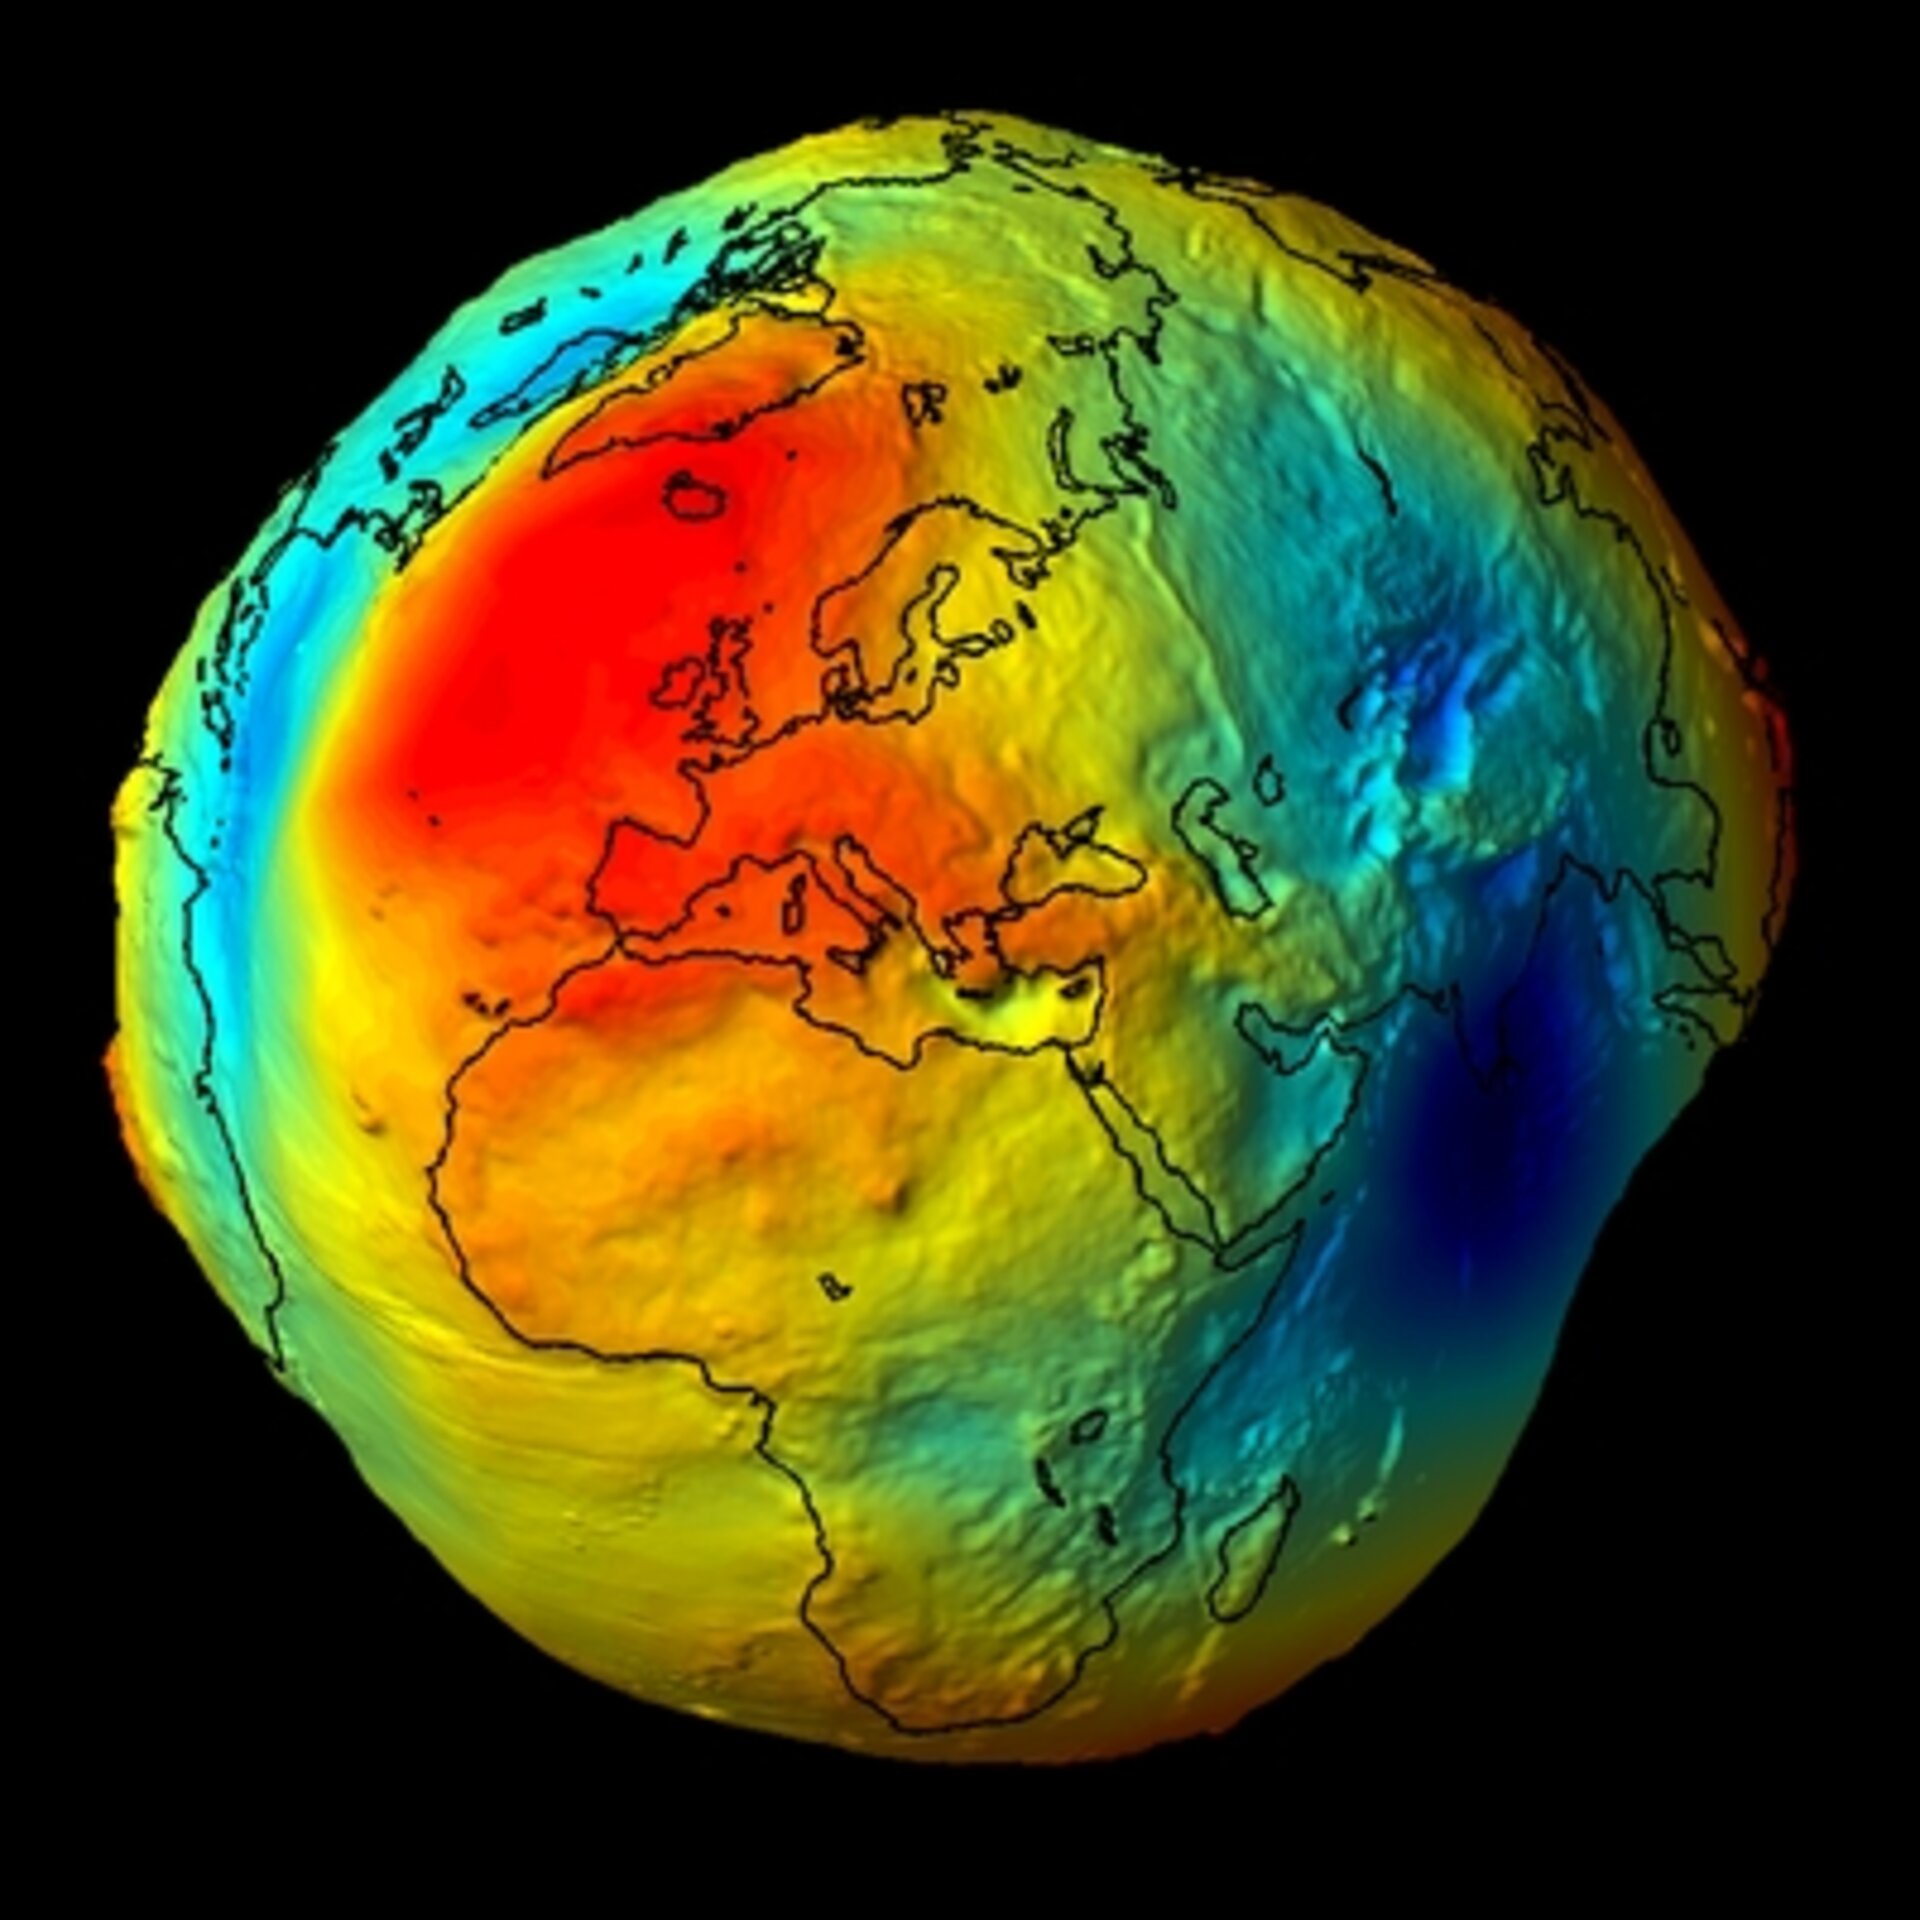 Earth Explorers - The Earth's true shape